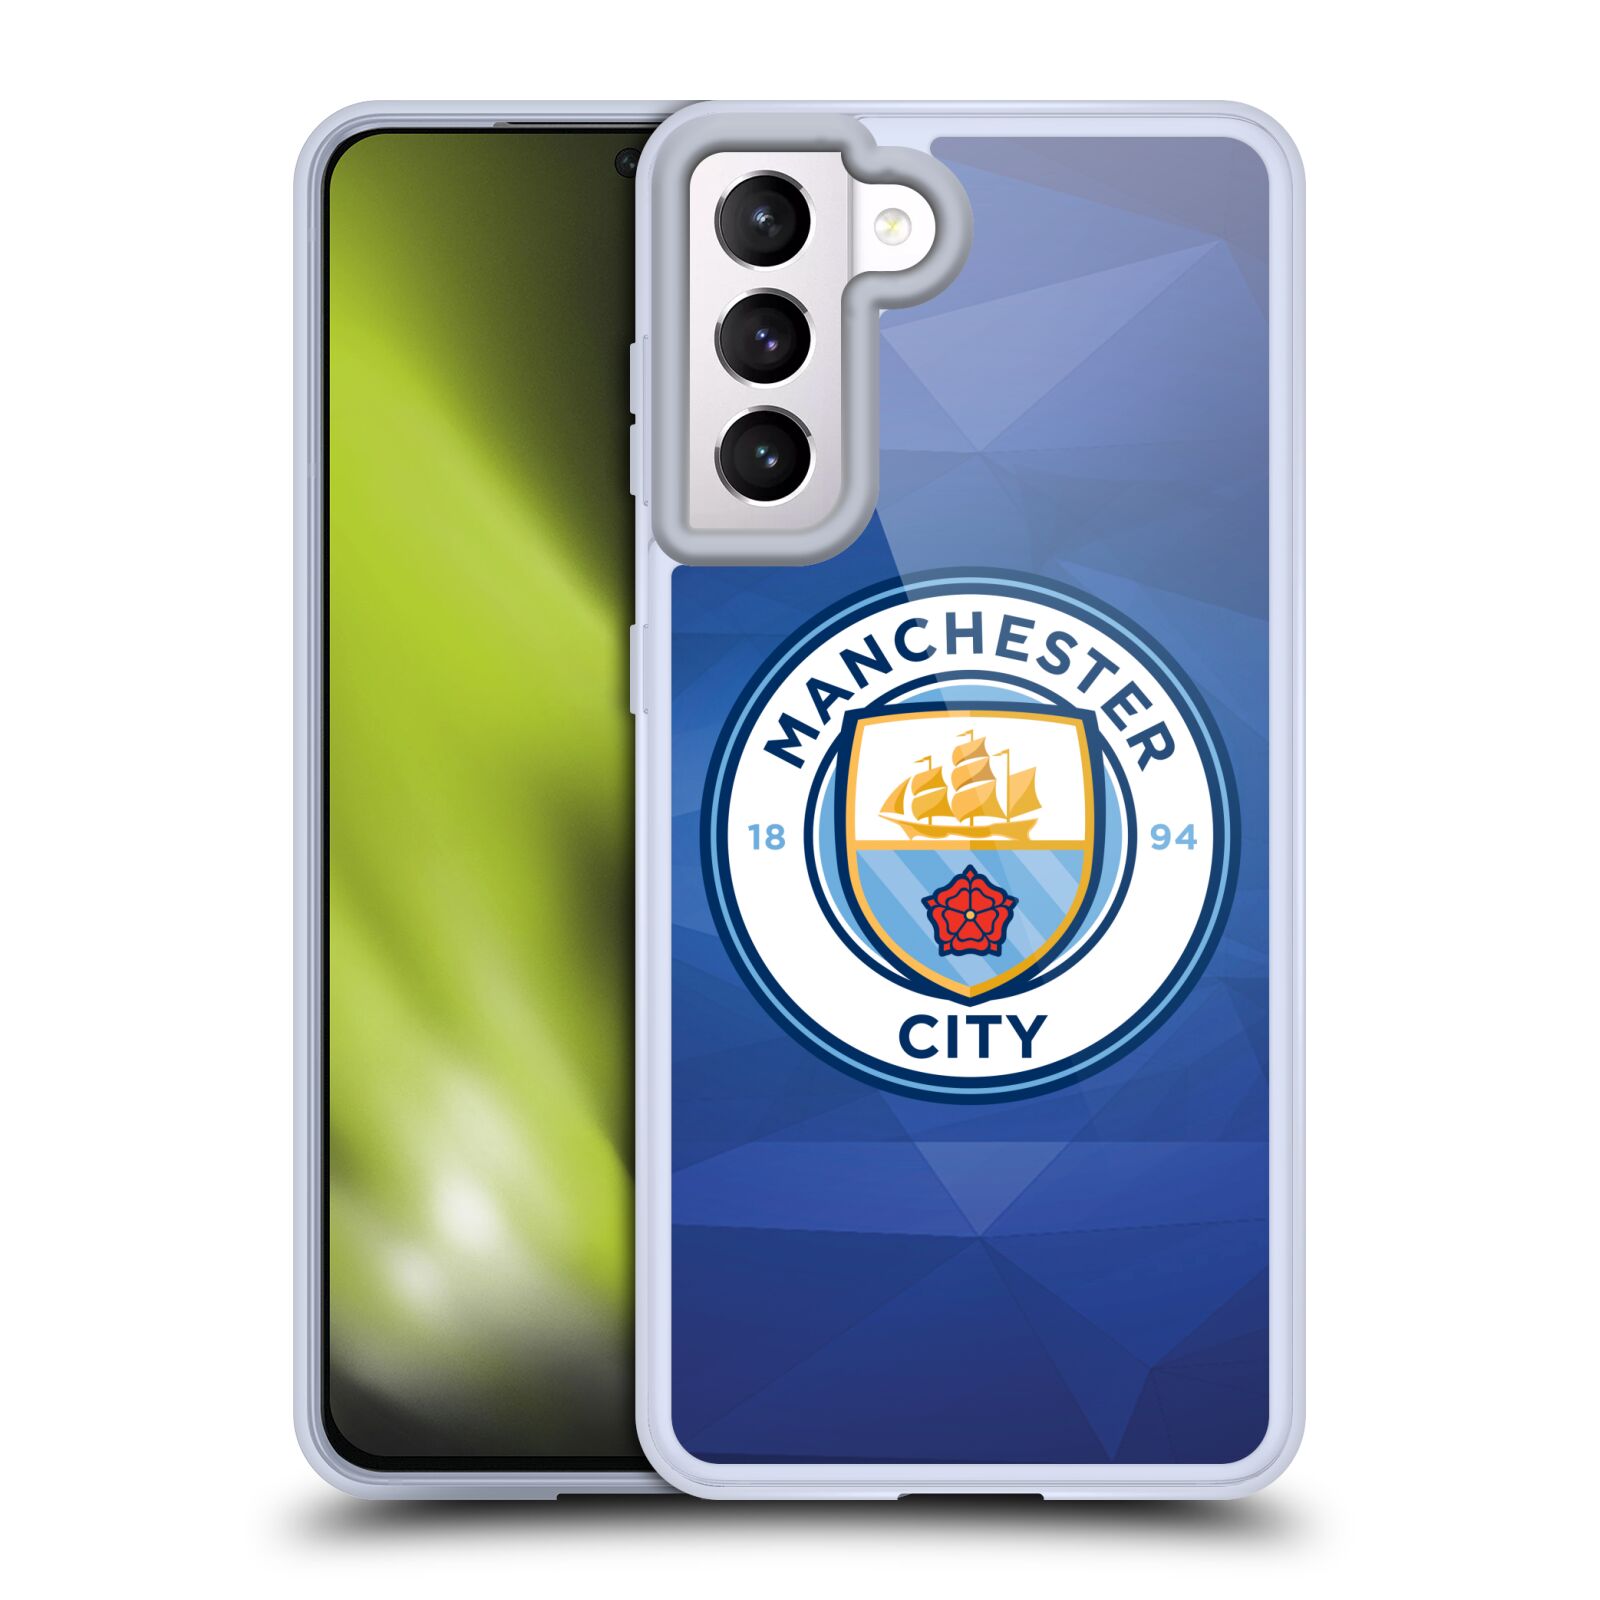 Silikonové pouzdro na mobil Samsung Galaxy S21 5G - Head Case - Manchester City FC - Modré nové logo (Silikonový kryt, obal, pouzdro na mobilní telefon Samsung Galaxy S21 5G G991B s motivem Manchester City FC - Modré nové logo)